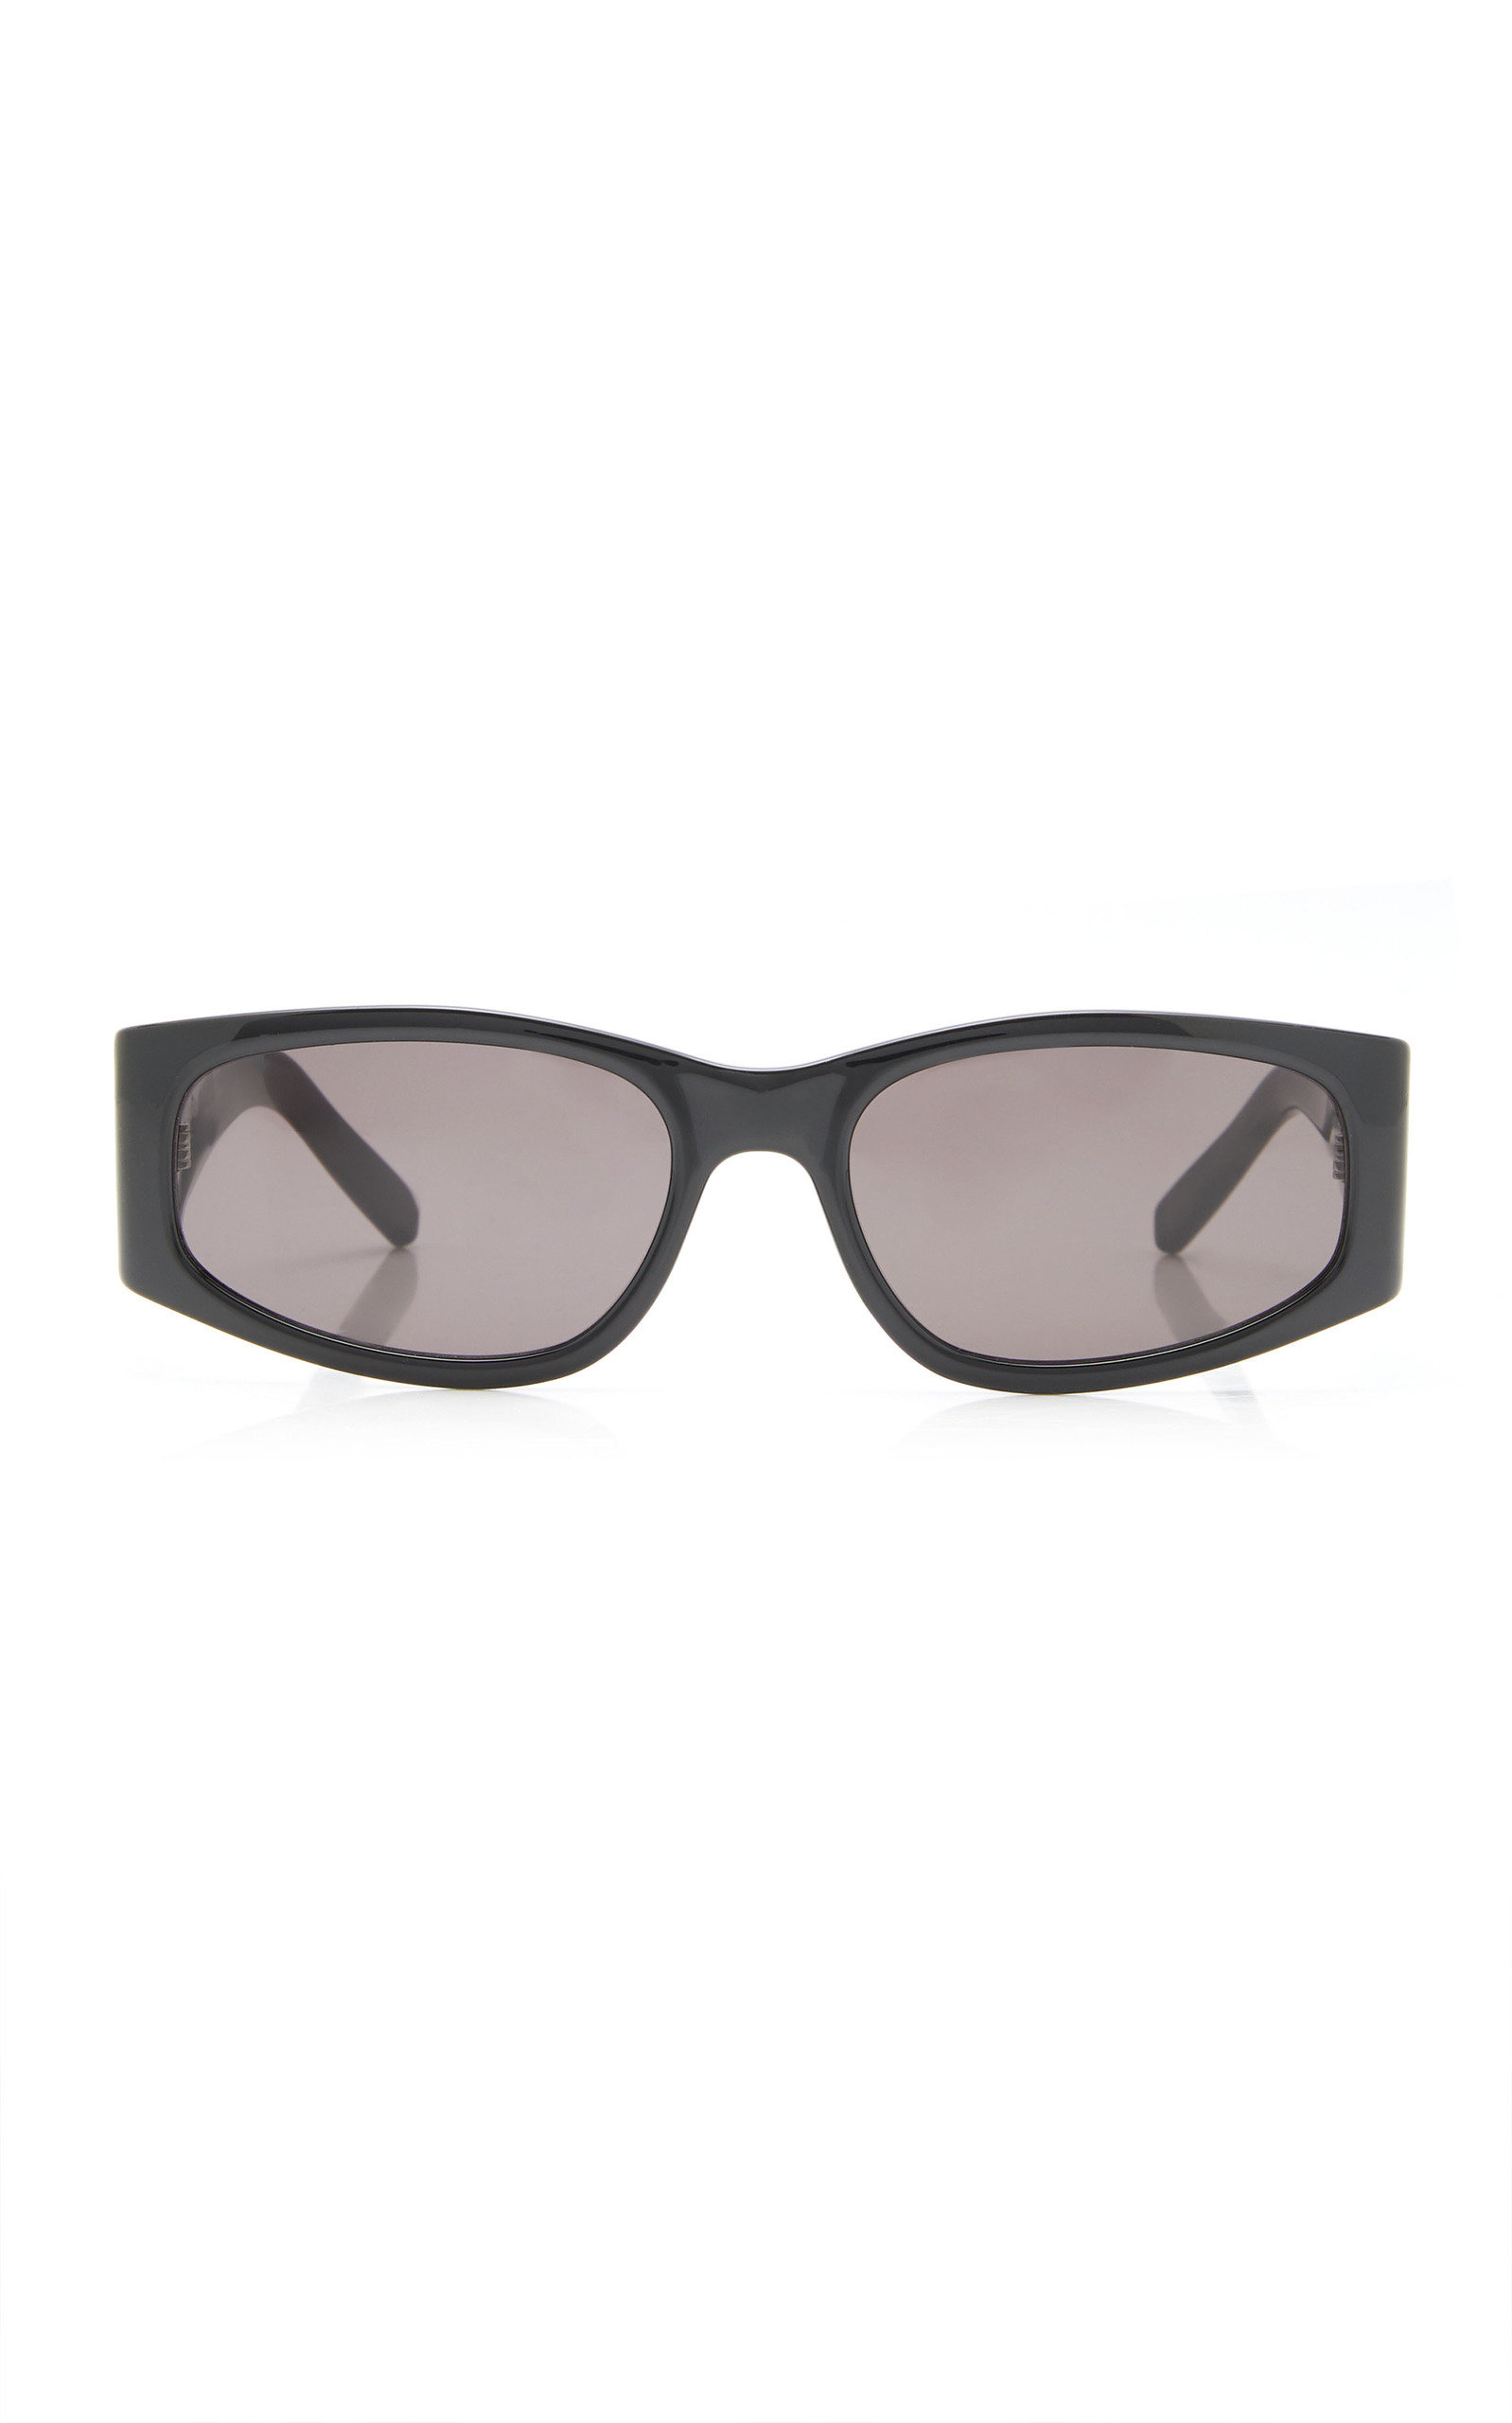 Saint Laurent - Women's Square Acetate Sunglasses - Black - OS - Moda Operandi